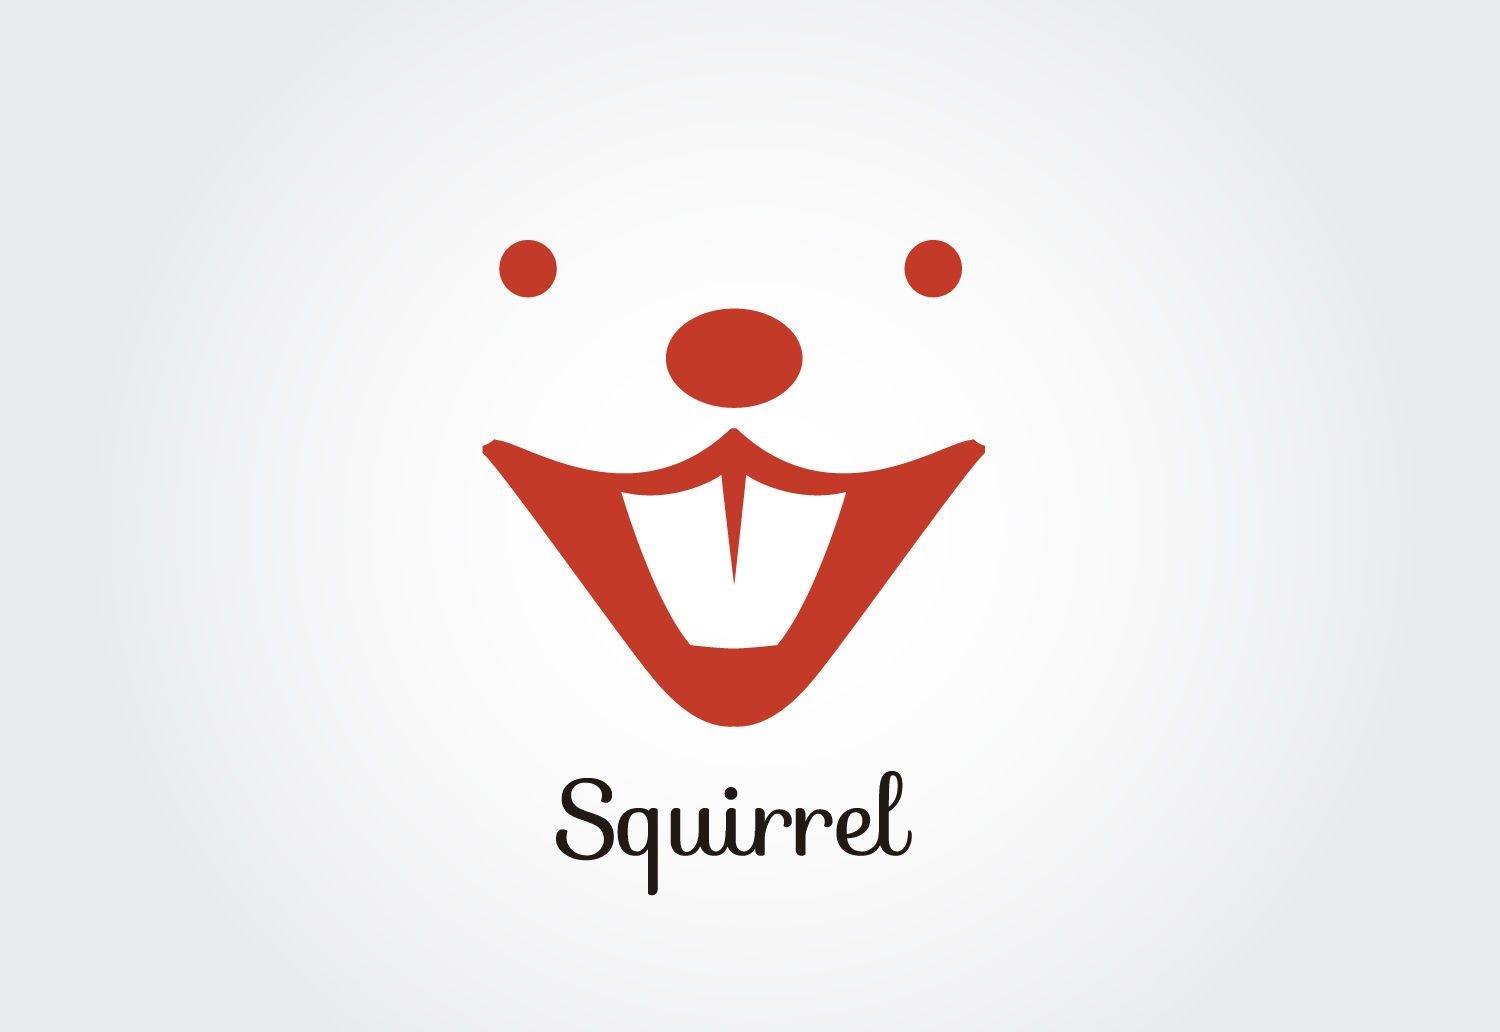 Squirrel face logo template